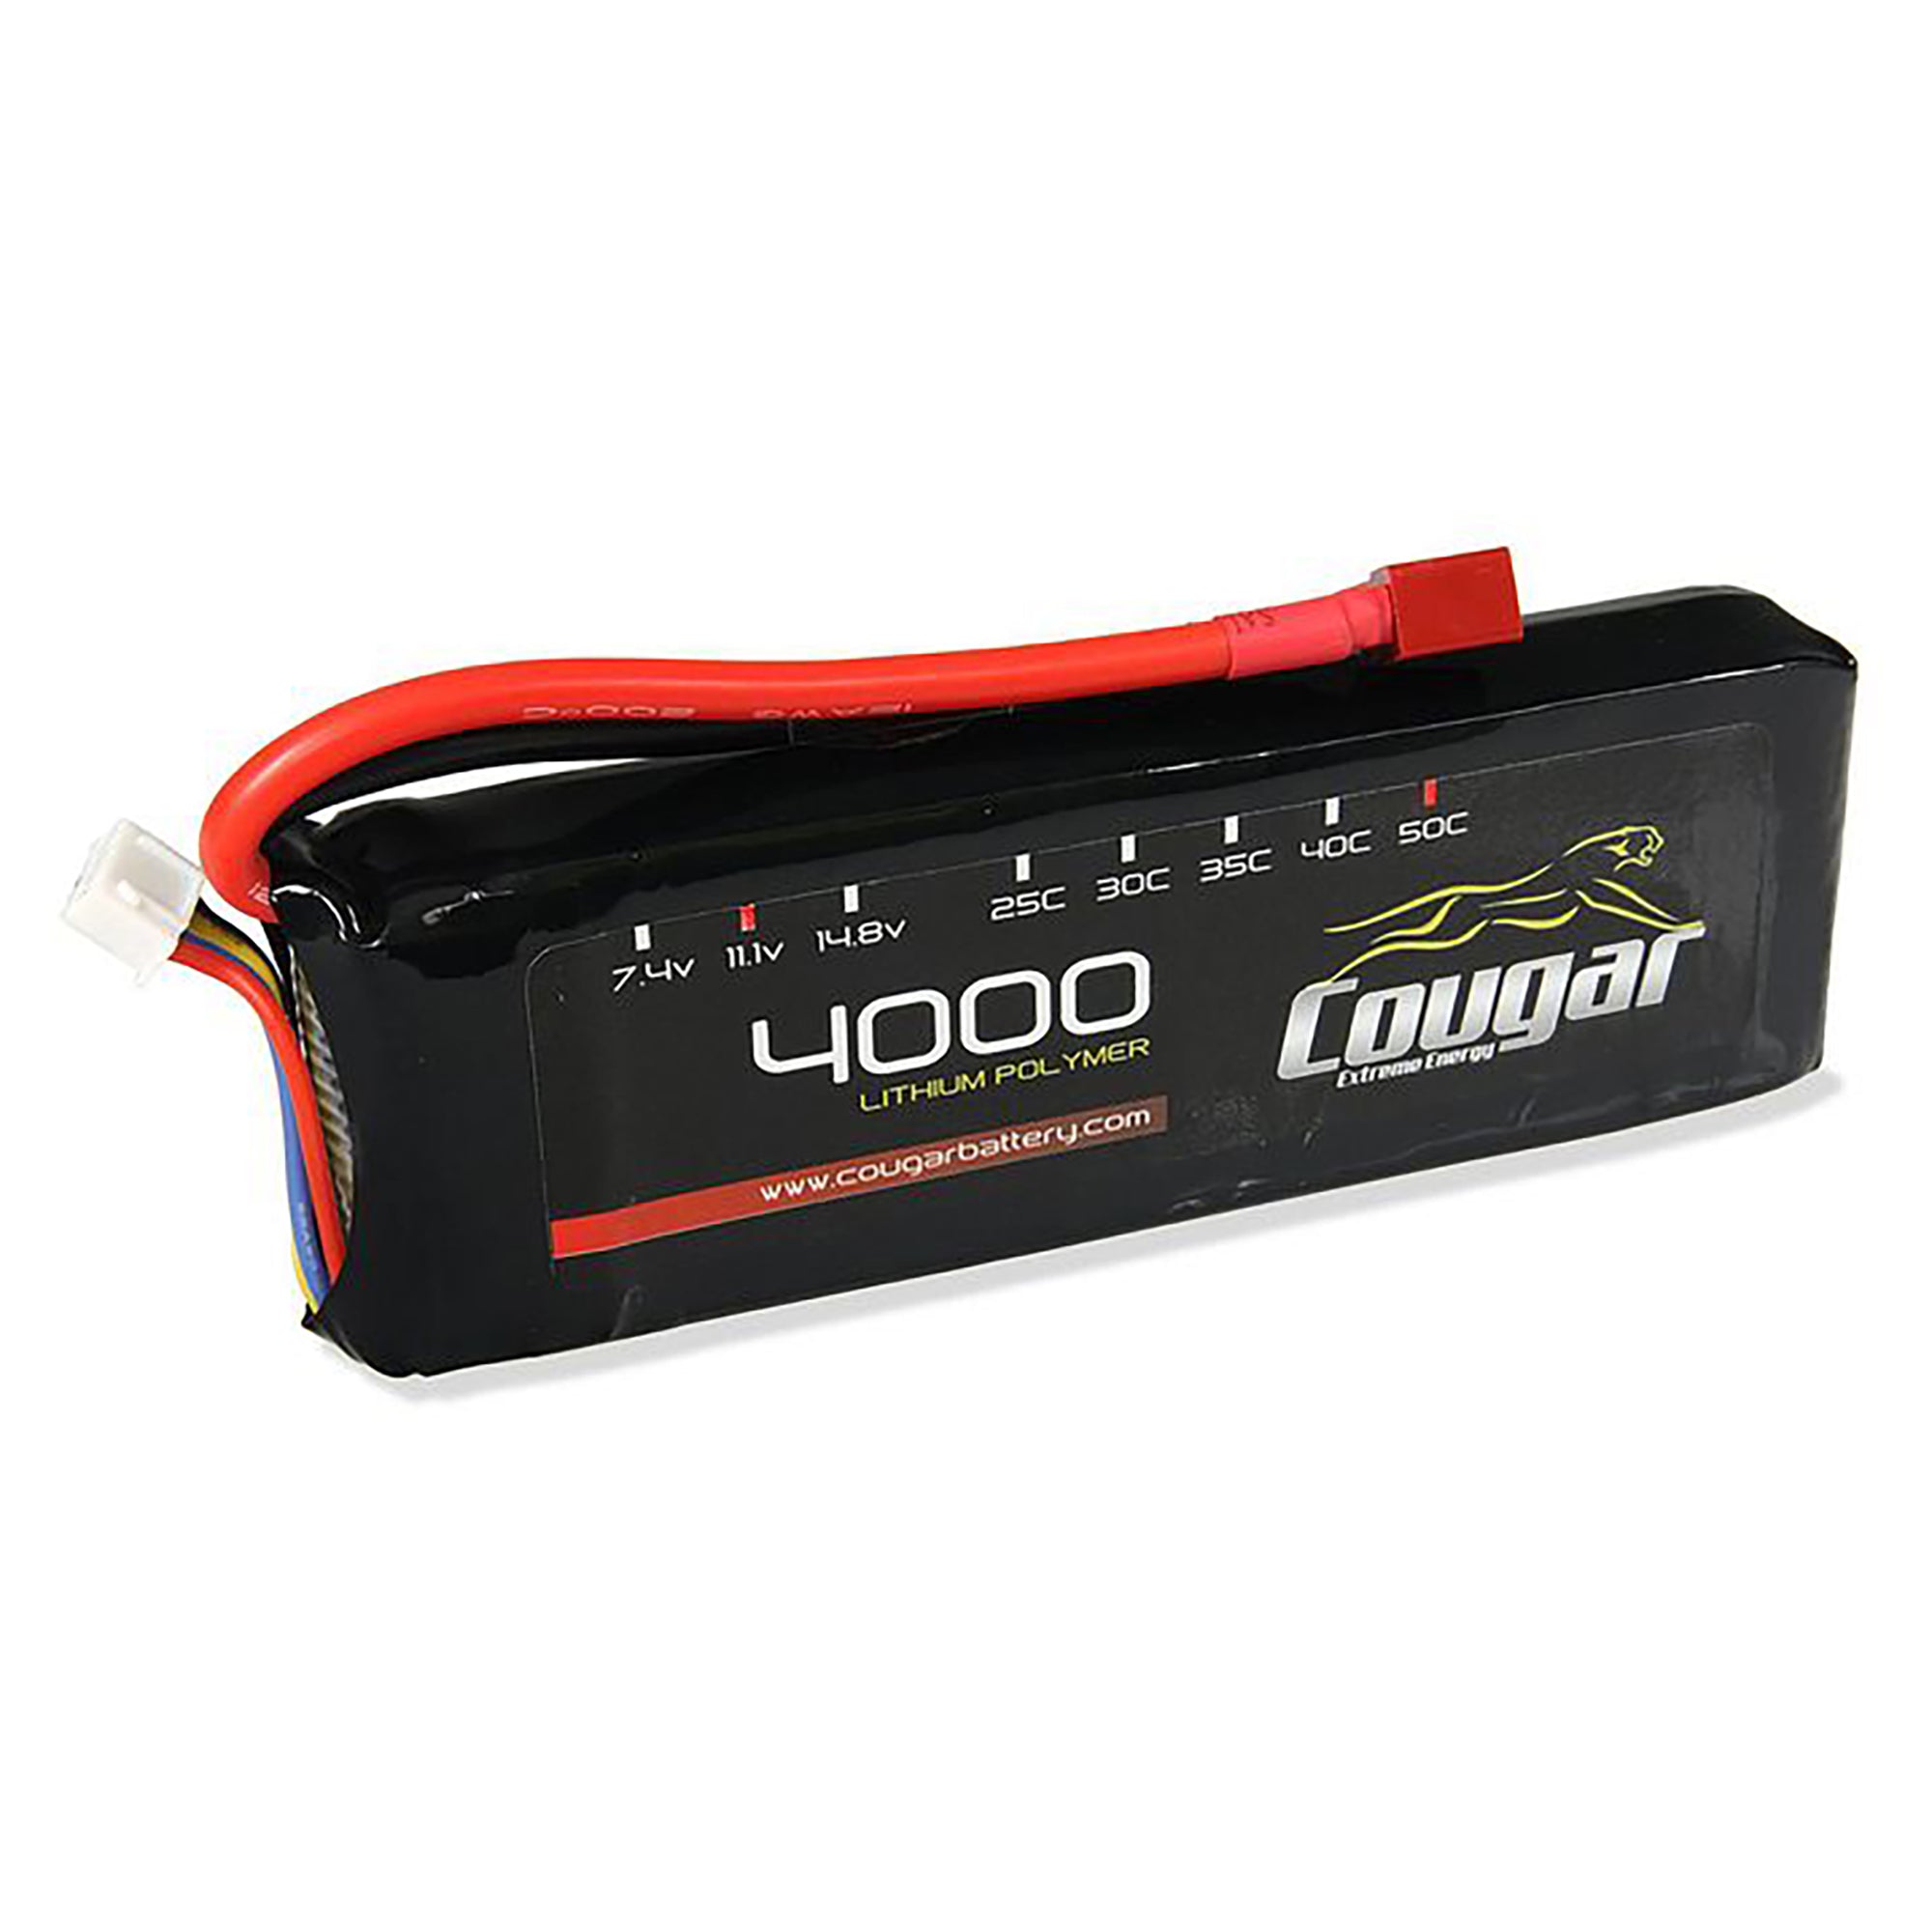 Cougar 4000mAh 11.1v 3S 50C Soft Case LiPo Battery